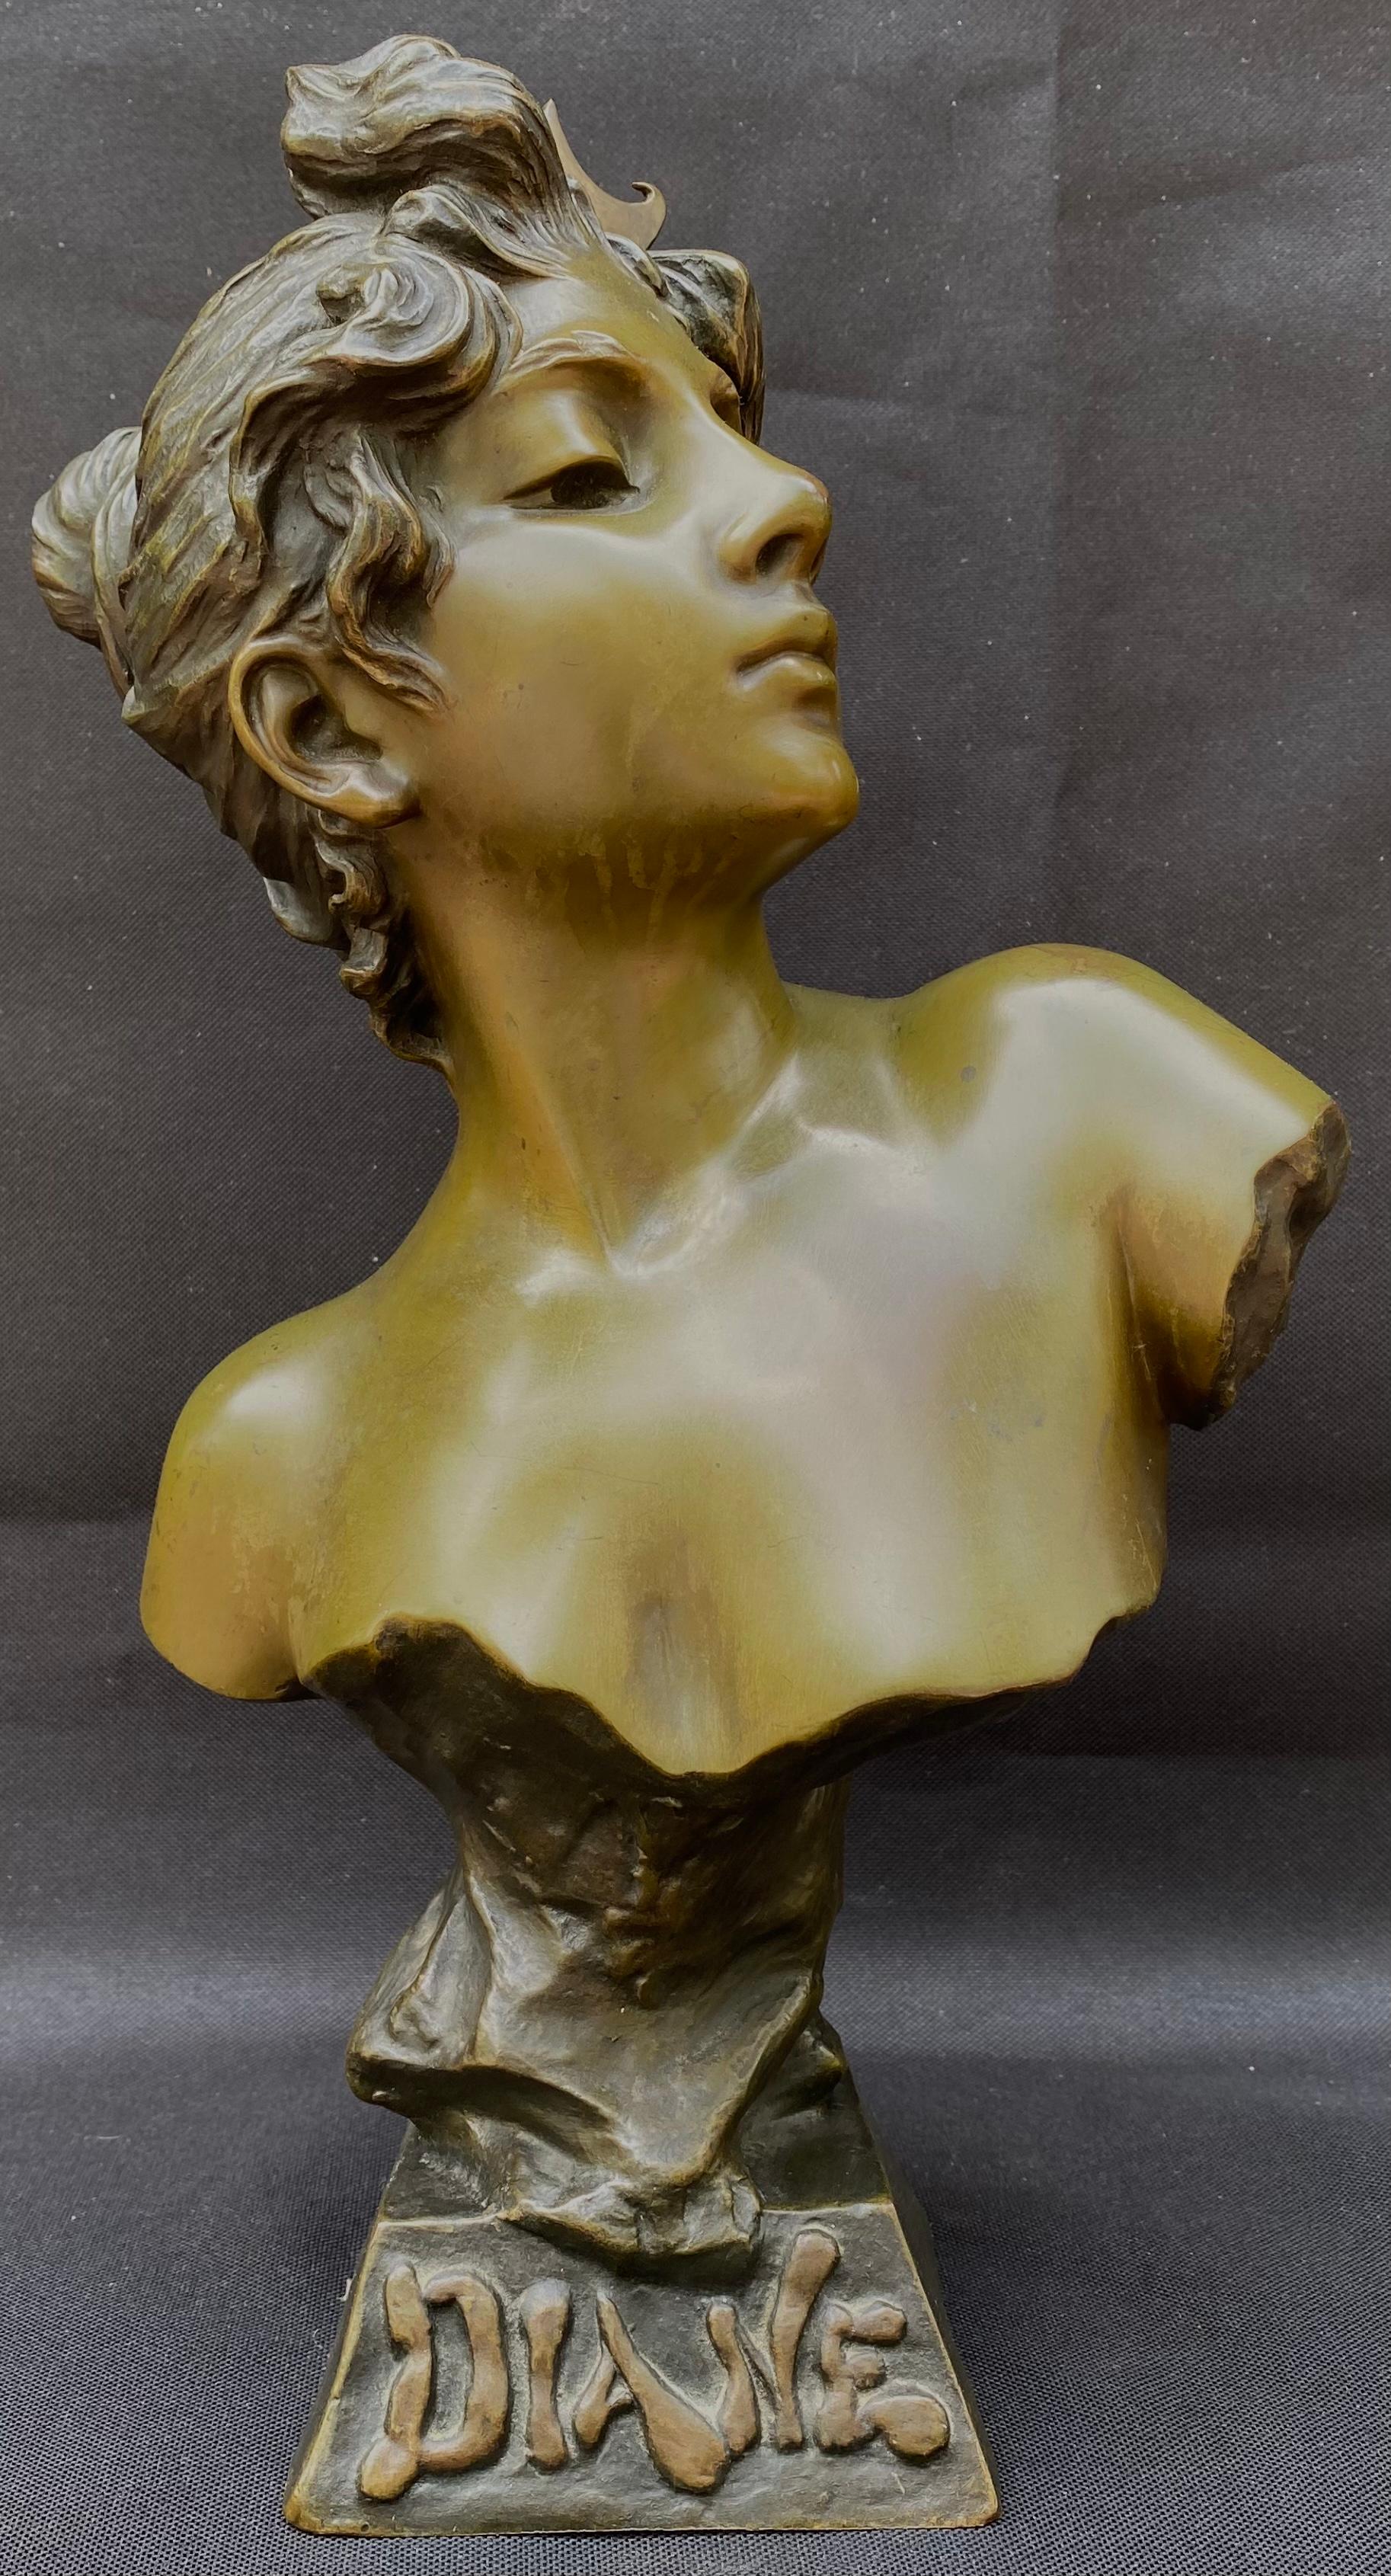 Emmanuel Villanis Figurative Sculpture - “Diana”